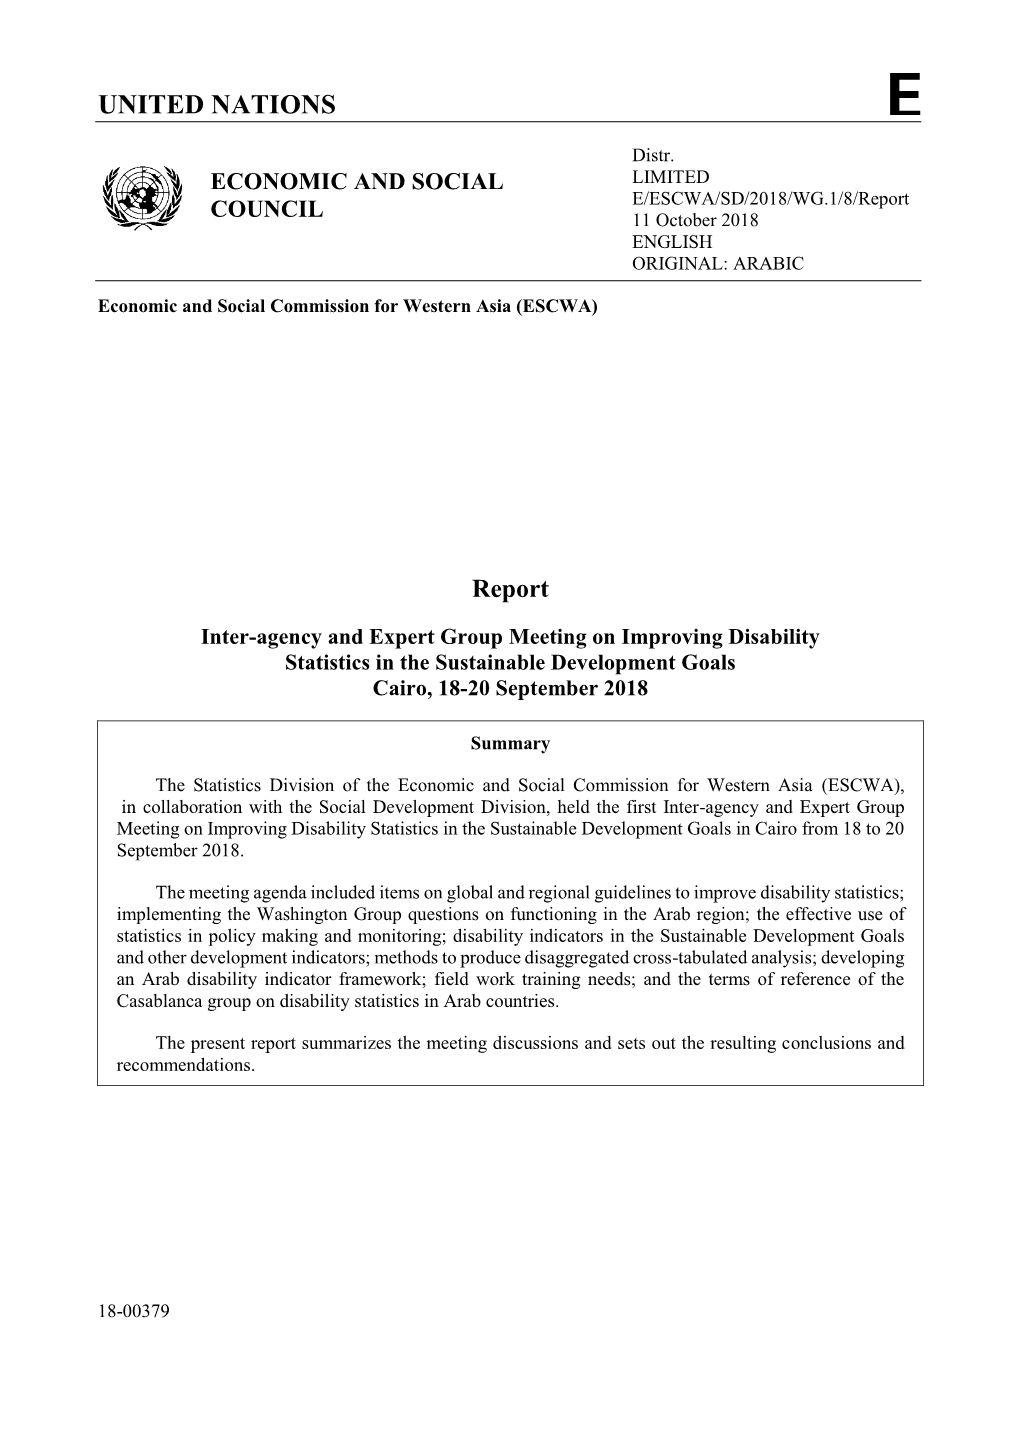 Report 11 October 2018 ENGLISH ORIGINAL: ARABIC